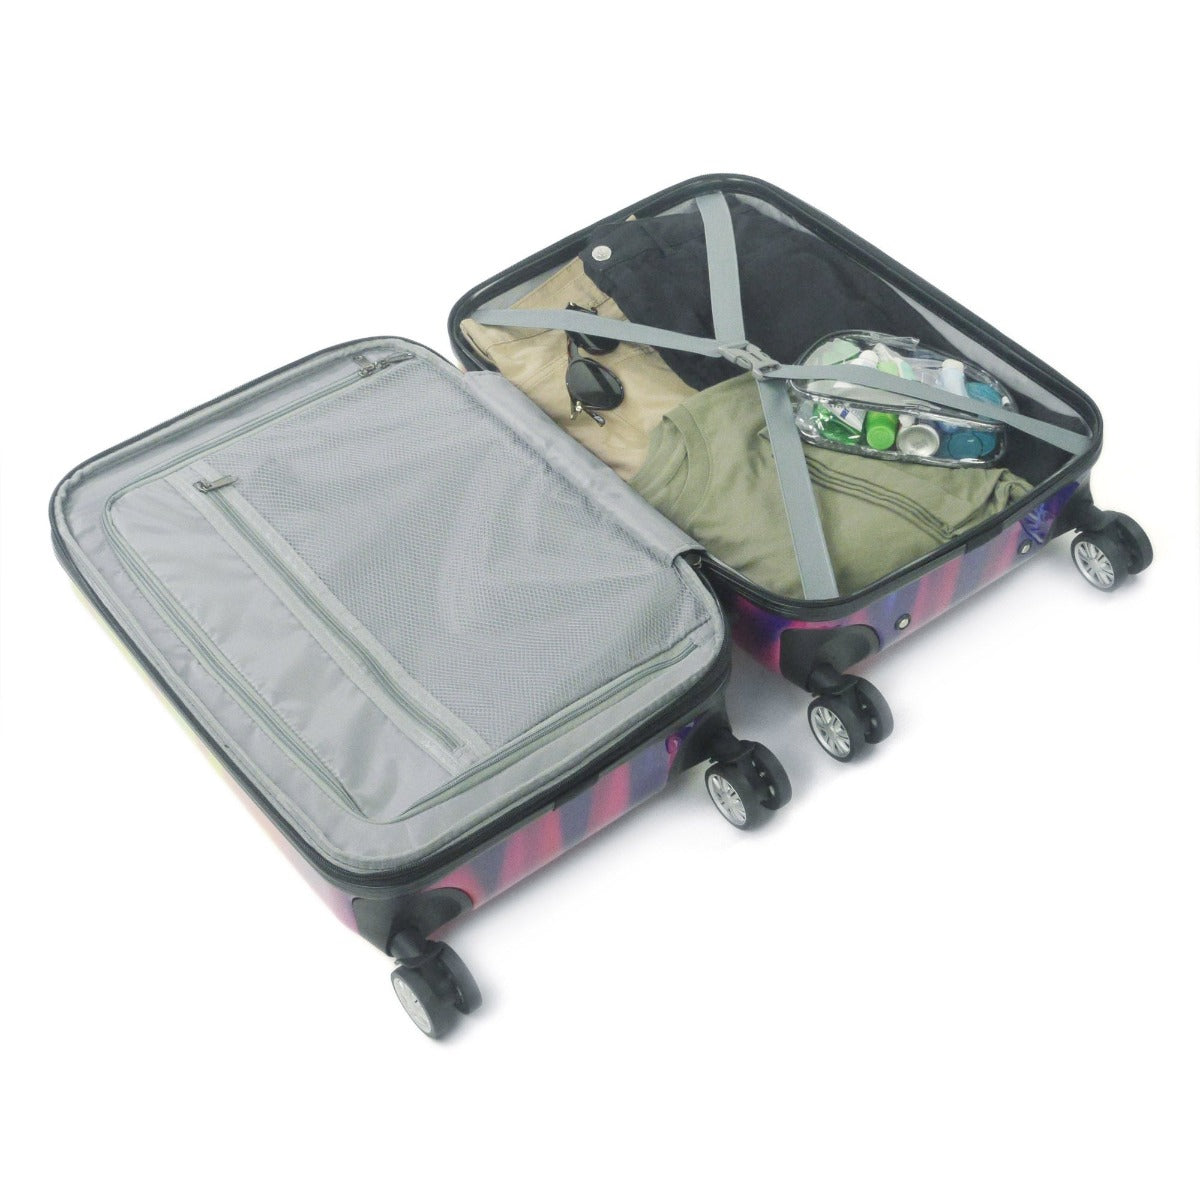 Tie-dye Rainbow Swirl 24" FŪL Spinner Rolling Suitcase Checked Luggage Interior 